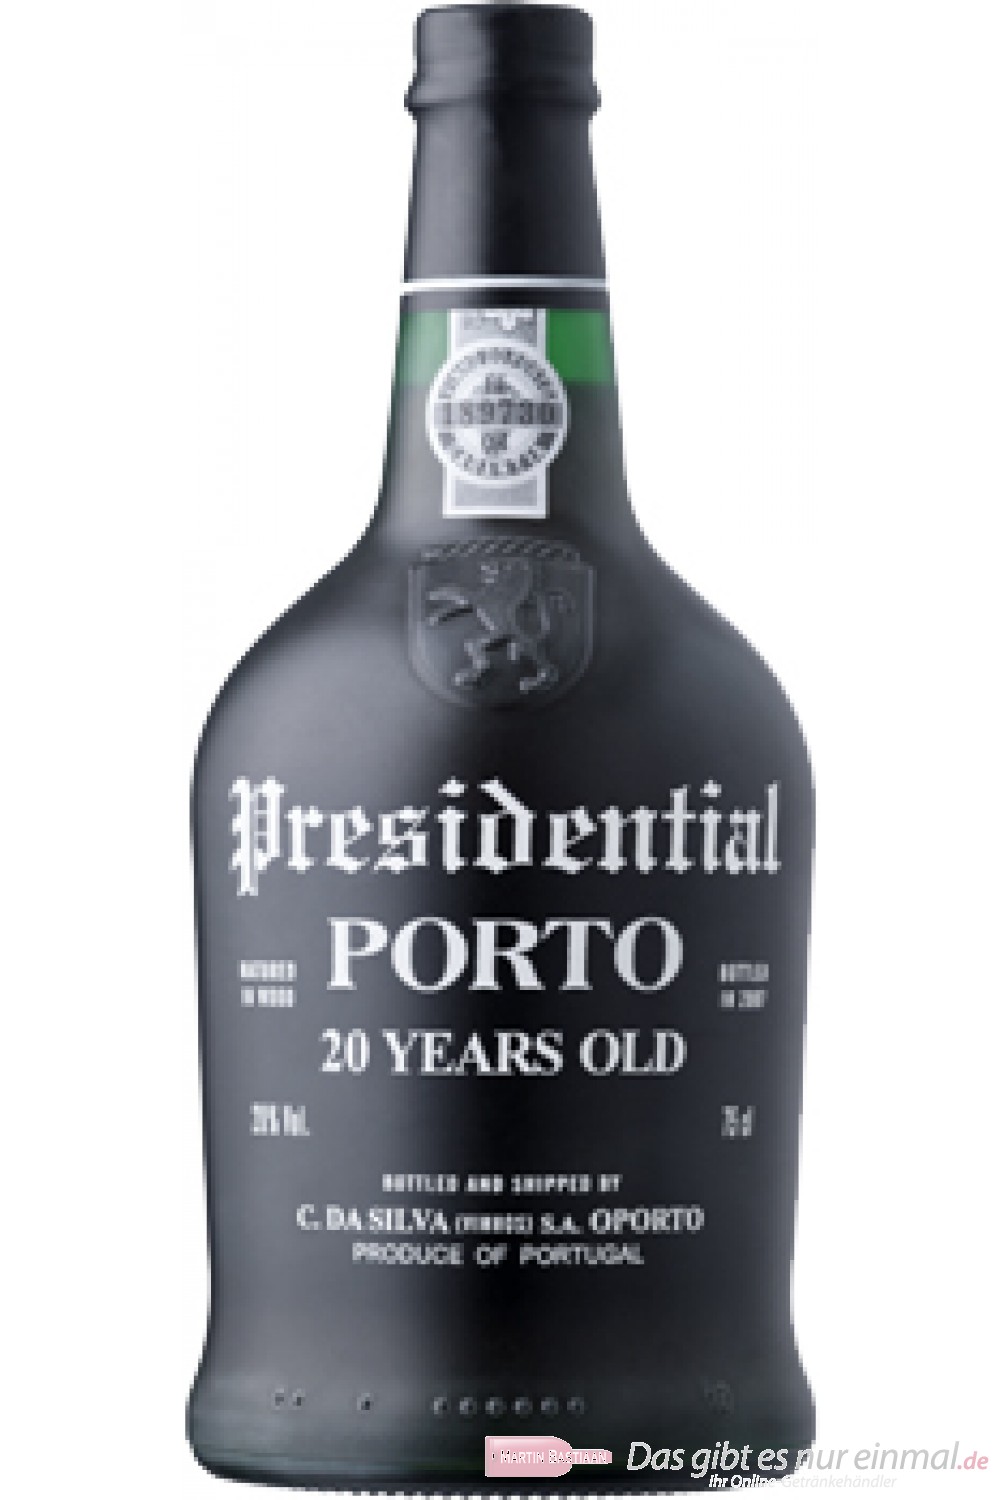 Presidential Porto 20 Years